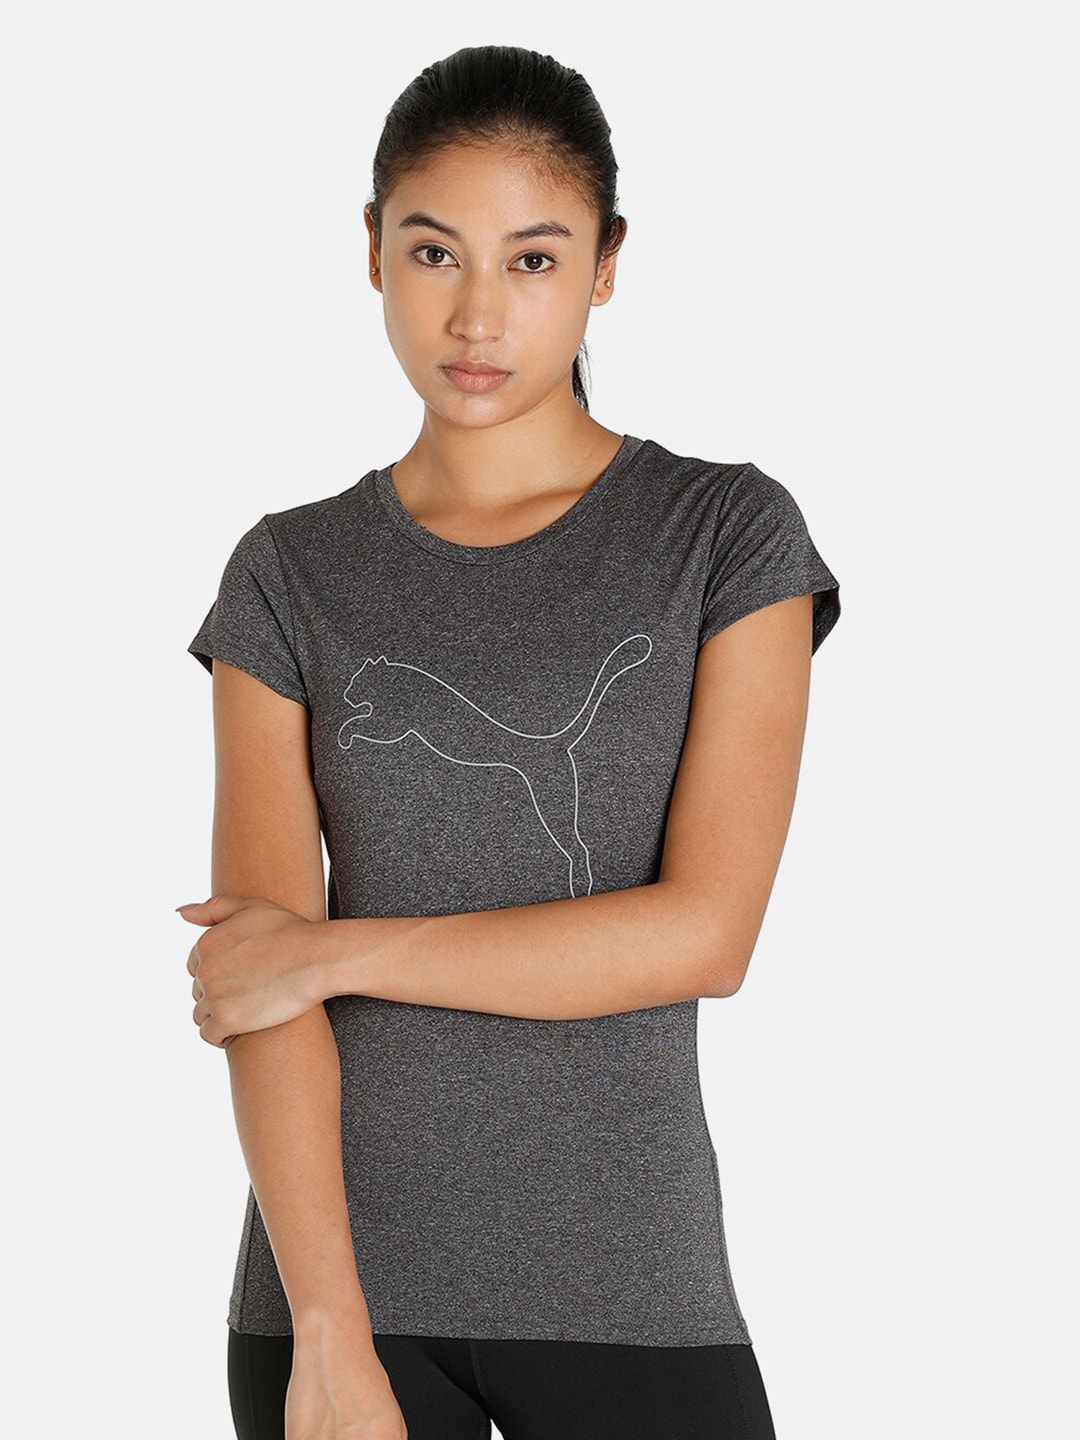 Puma Women Grey Brand Logo Printed Slim Fit Training or Gym T-shirt Price in India